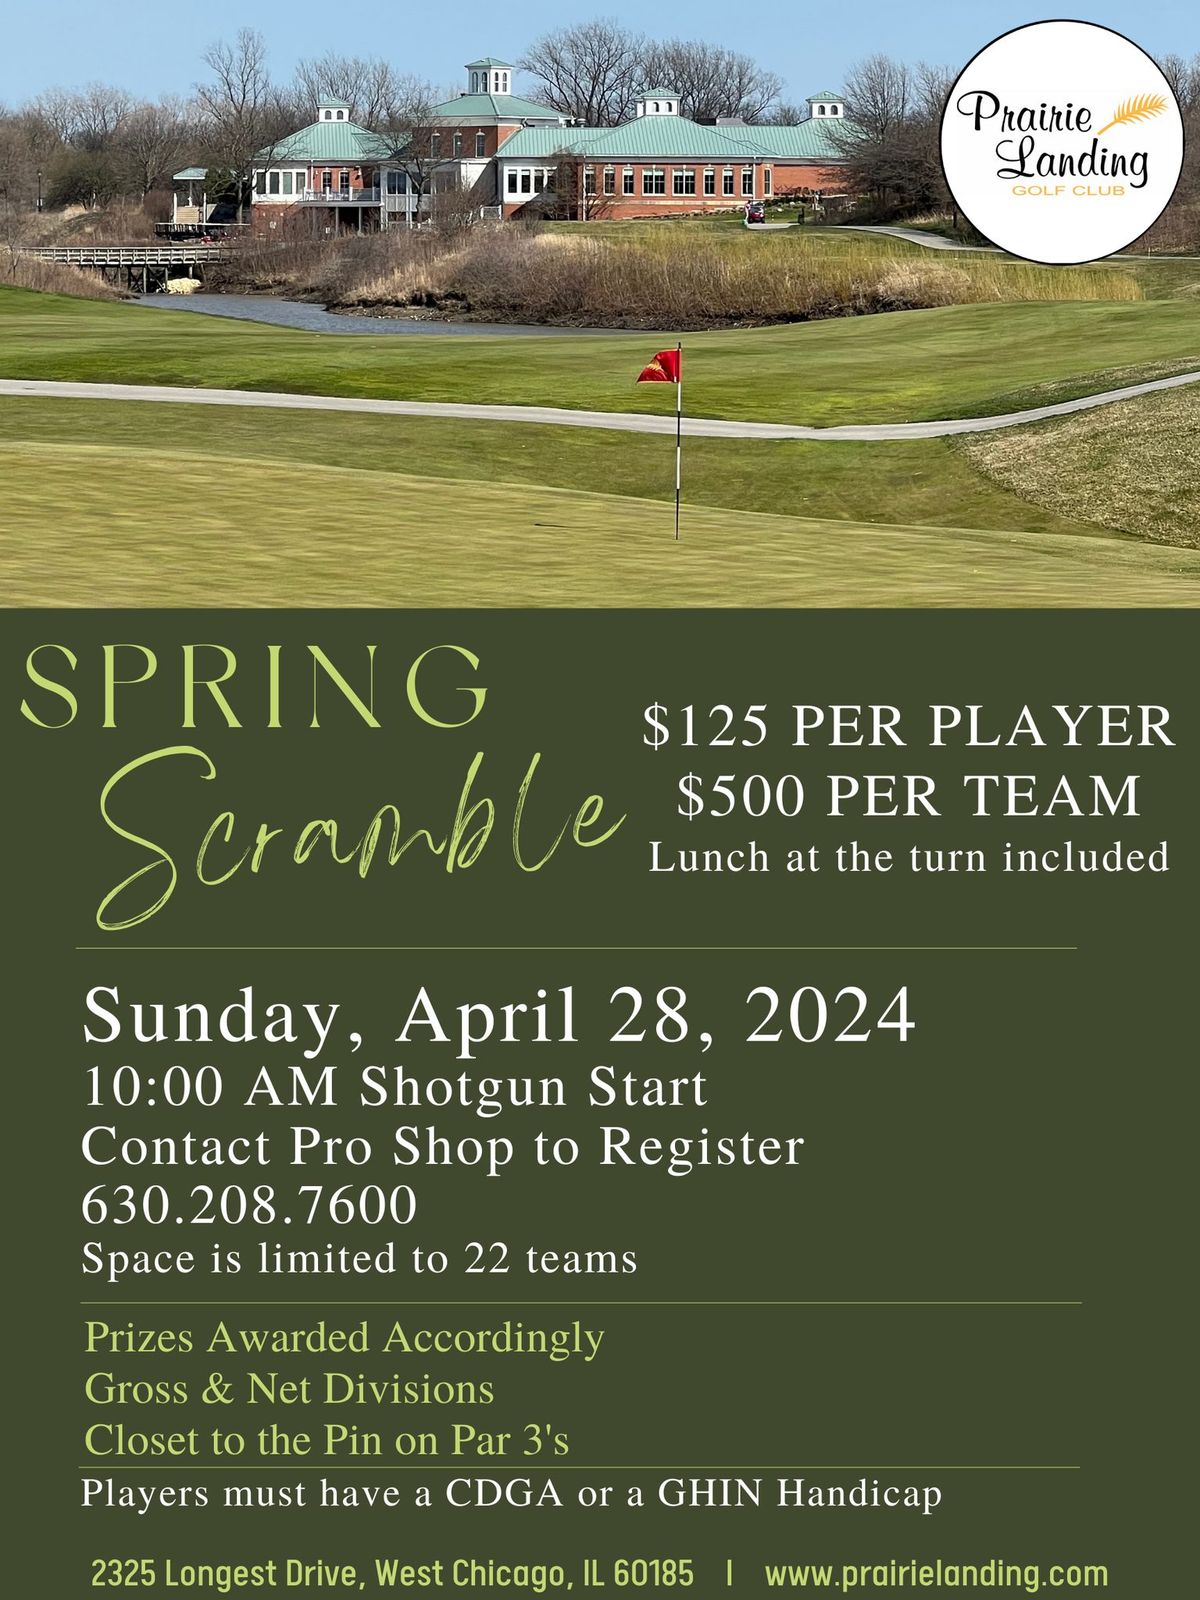 Spring Scramble at Prairie Landing Golf Club